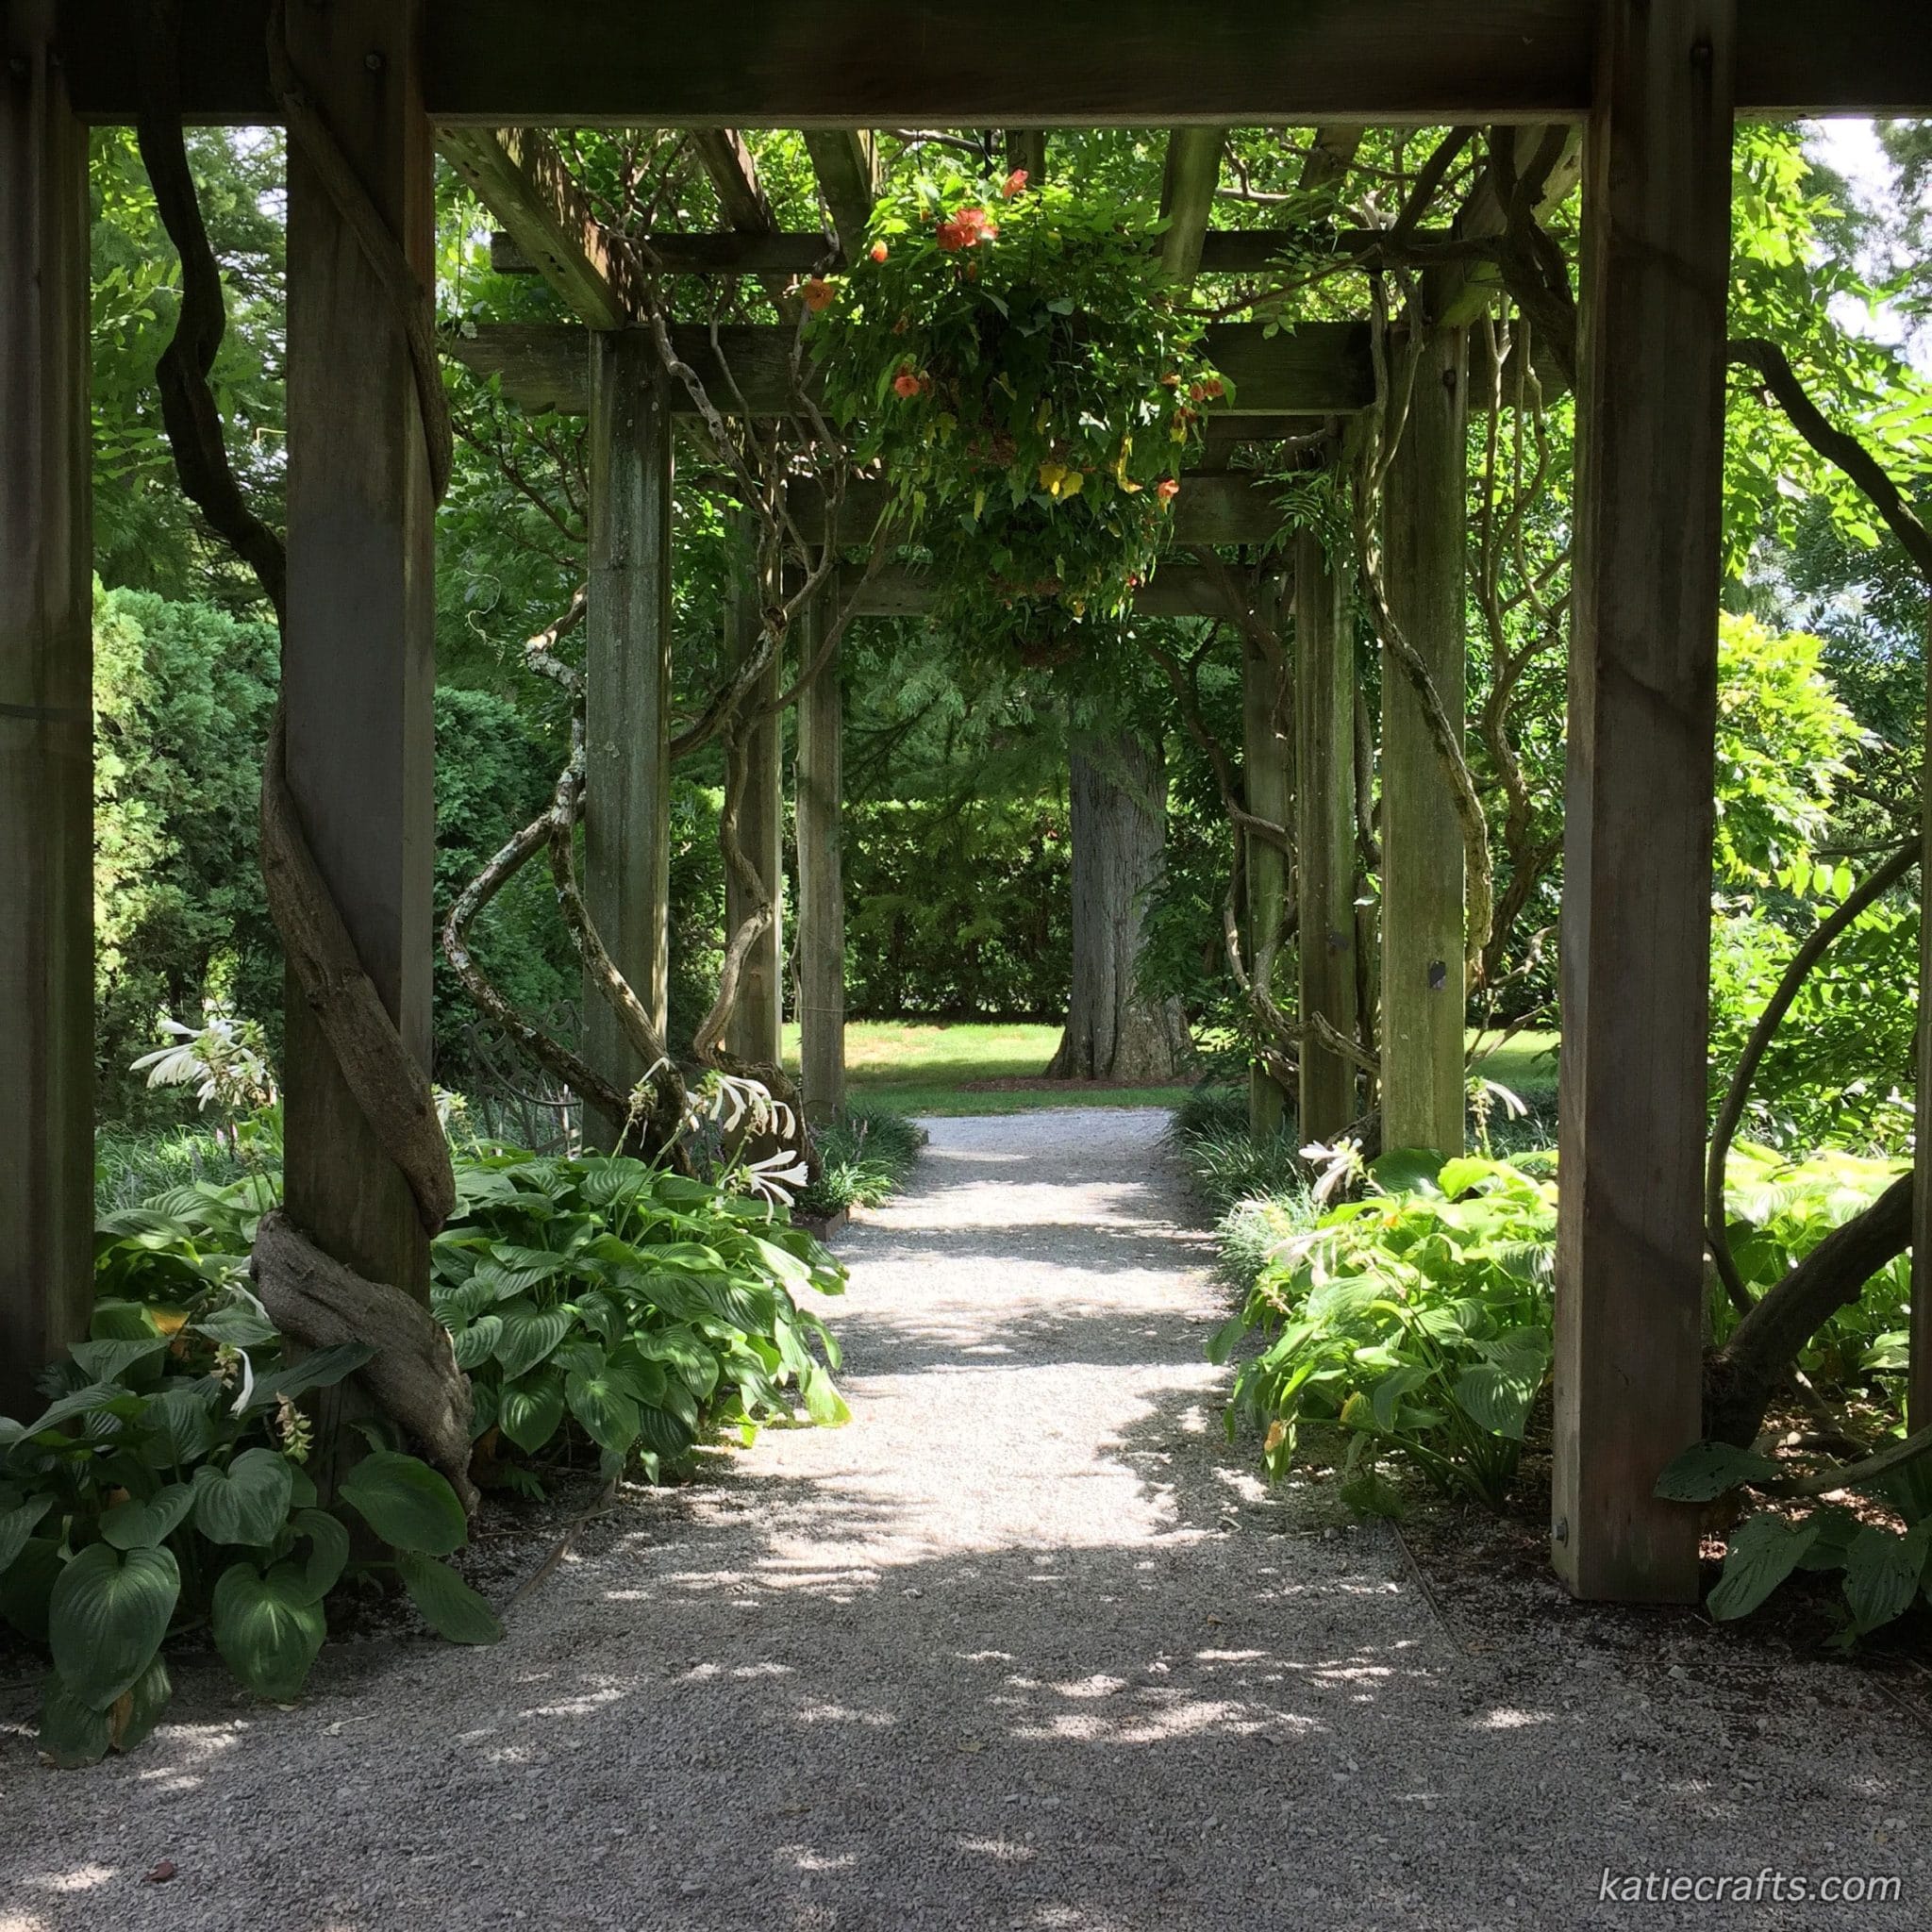 Longwood Gardens Photo Recap! by Katie Crafts; https://www.katiecrafts.com